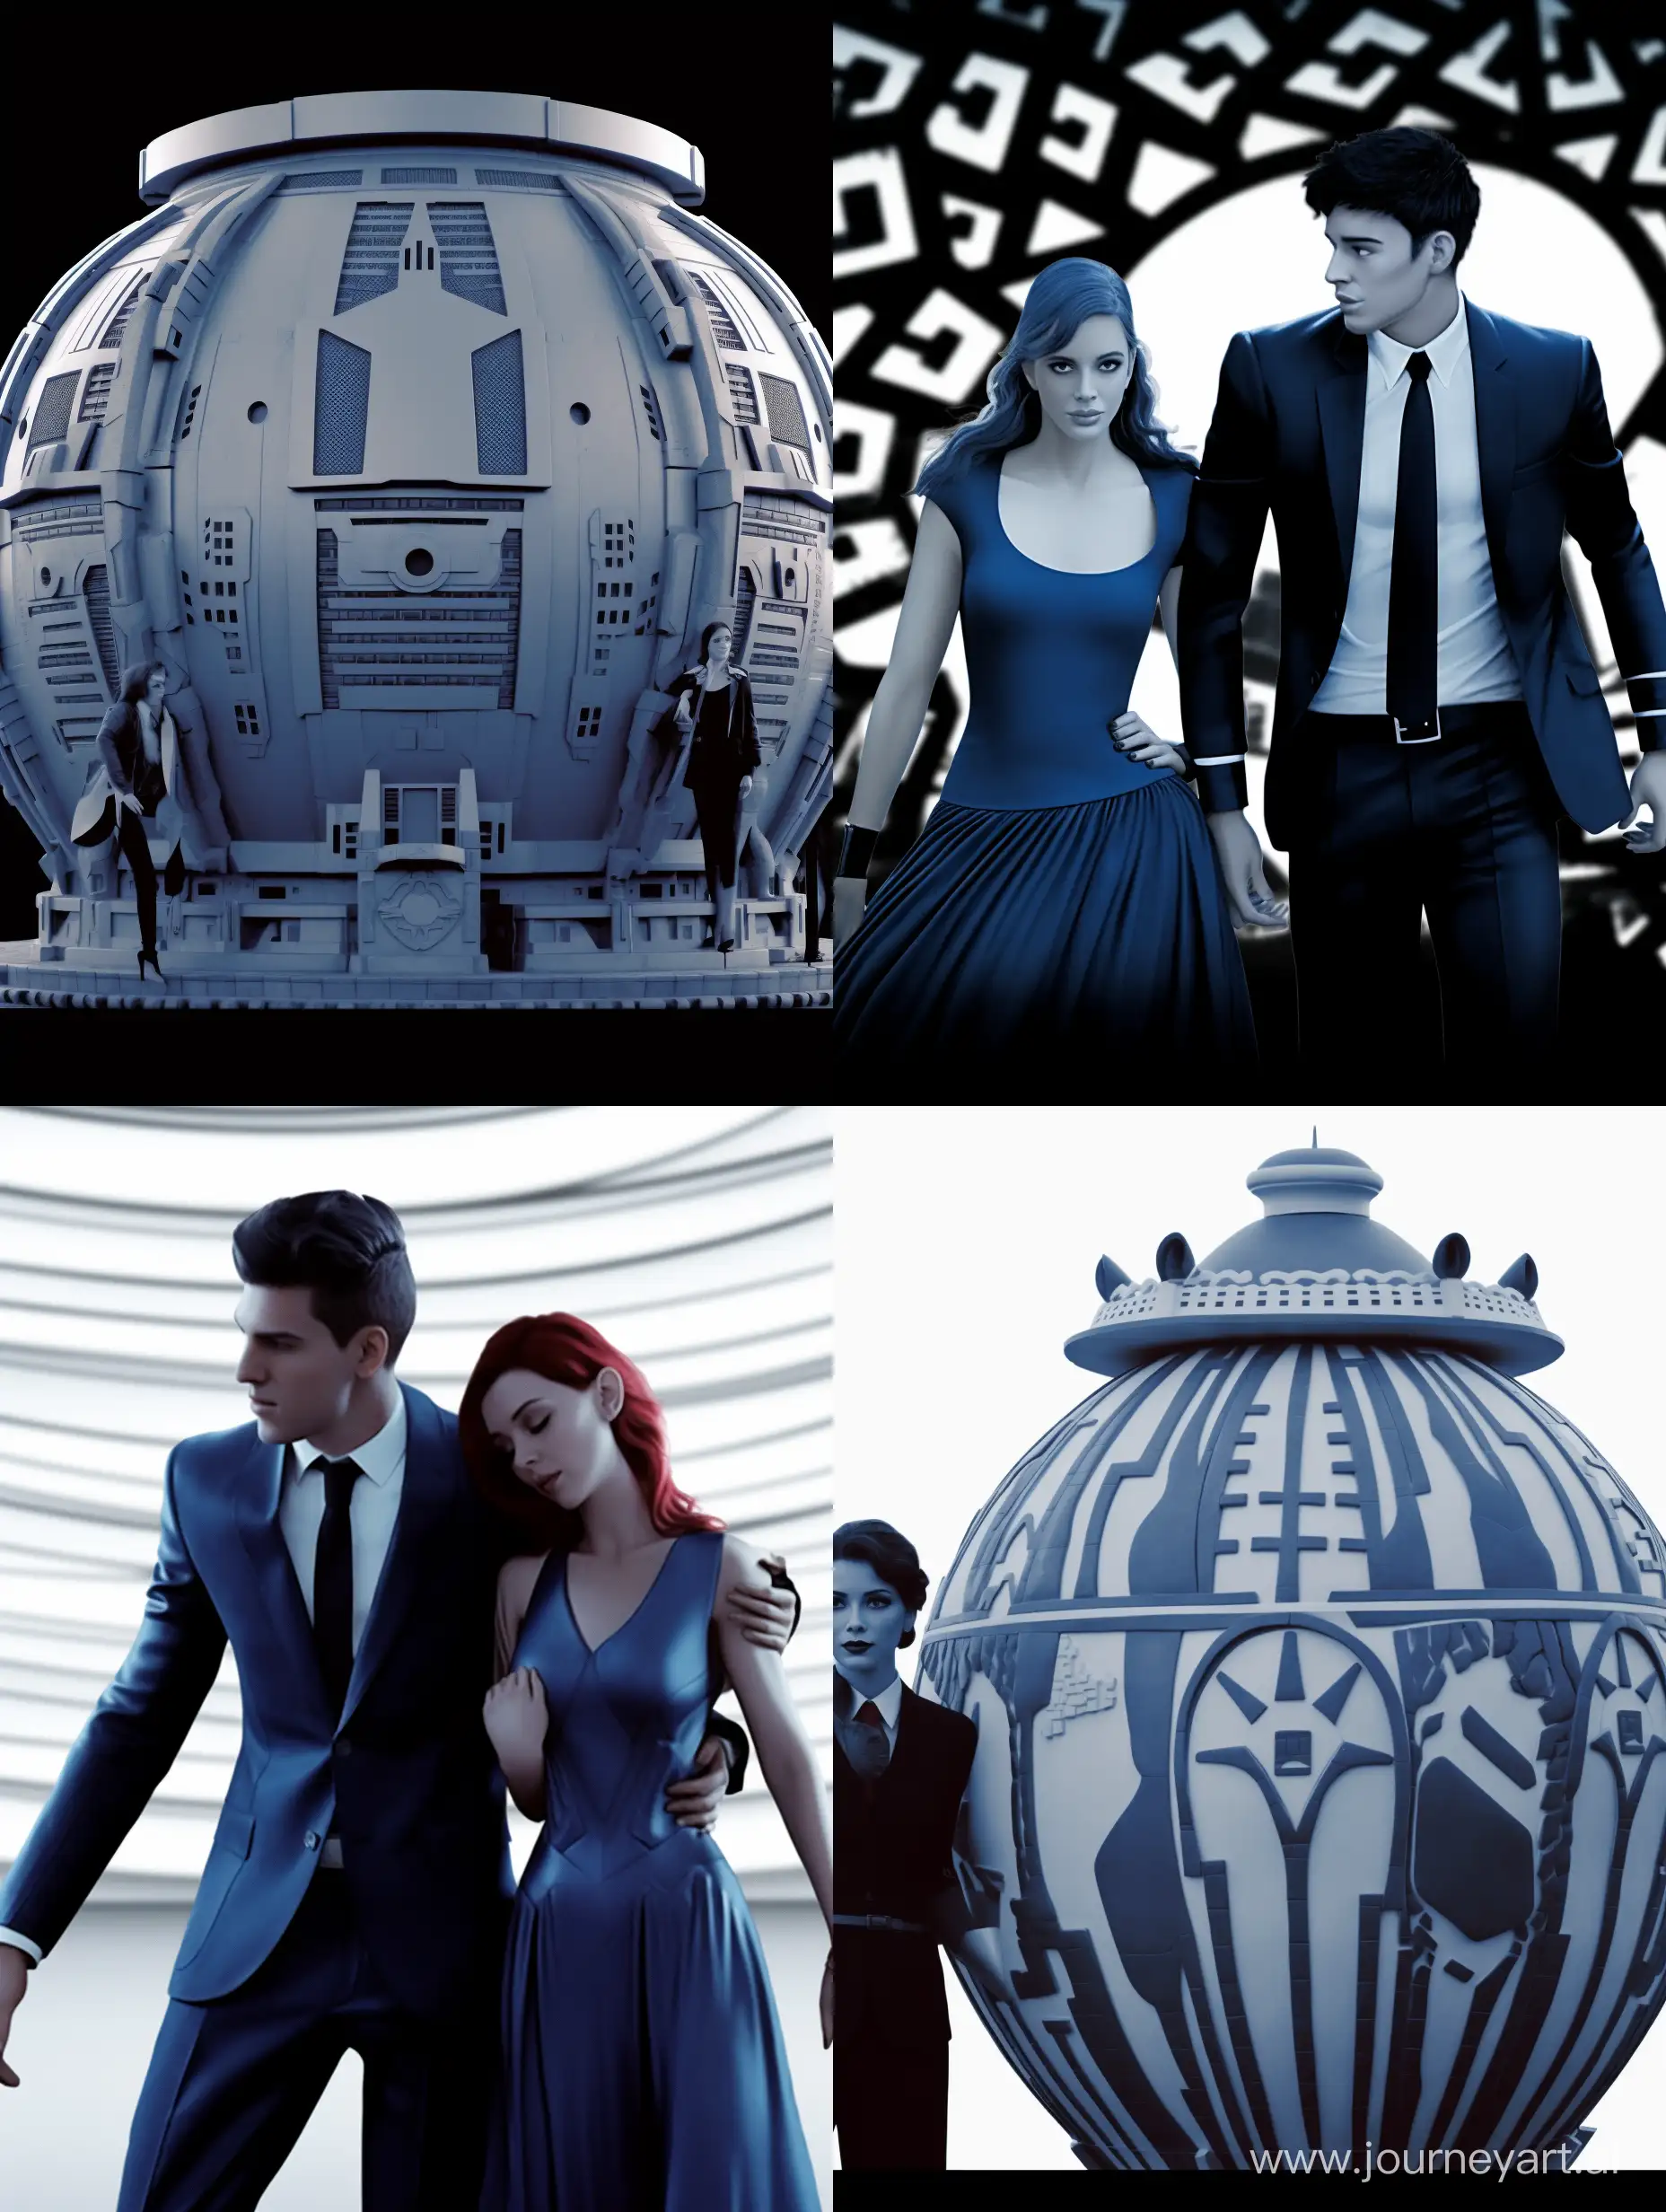 Spider-Man hugs Scarlett Johansson with his left arm, behind the casino